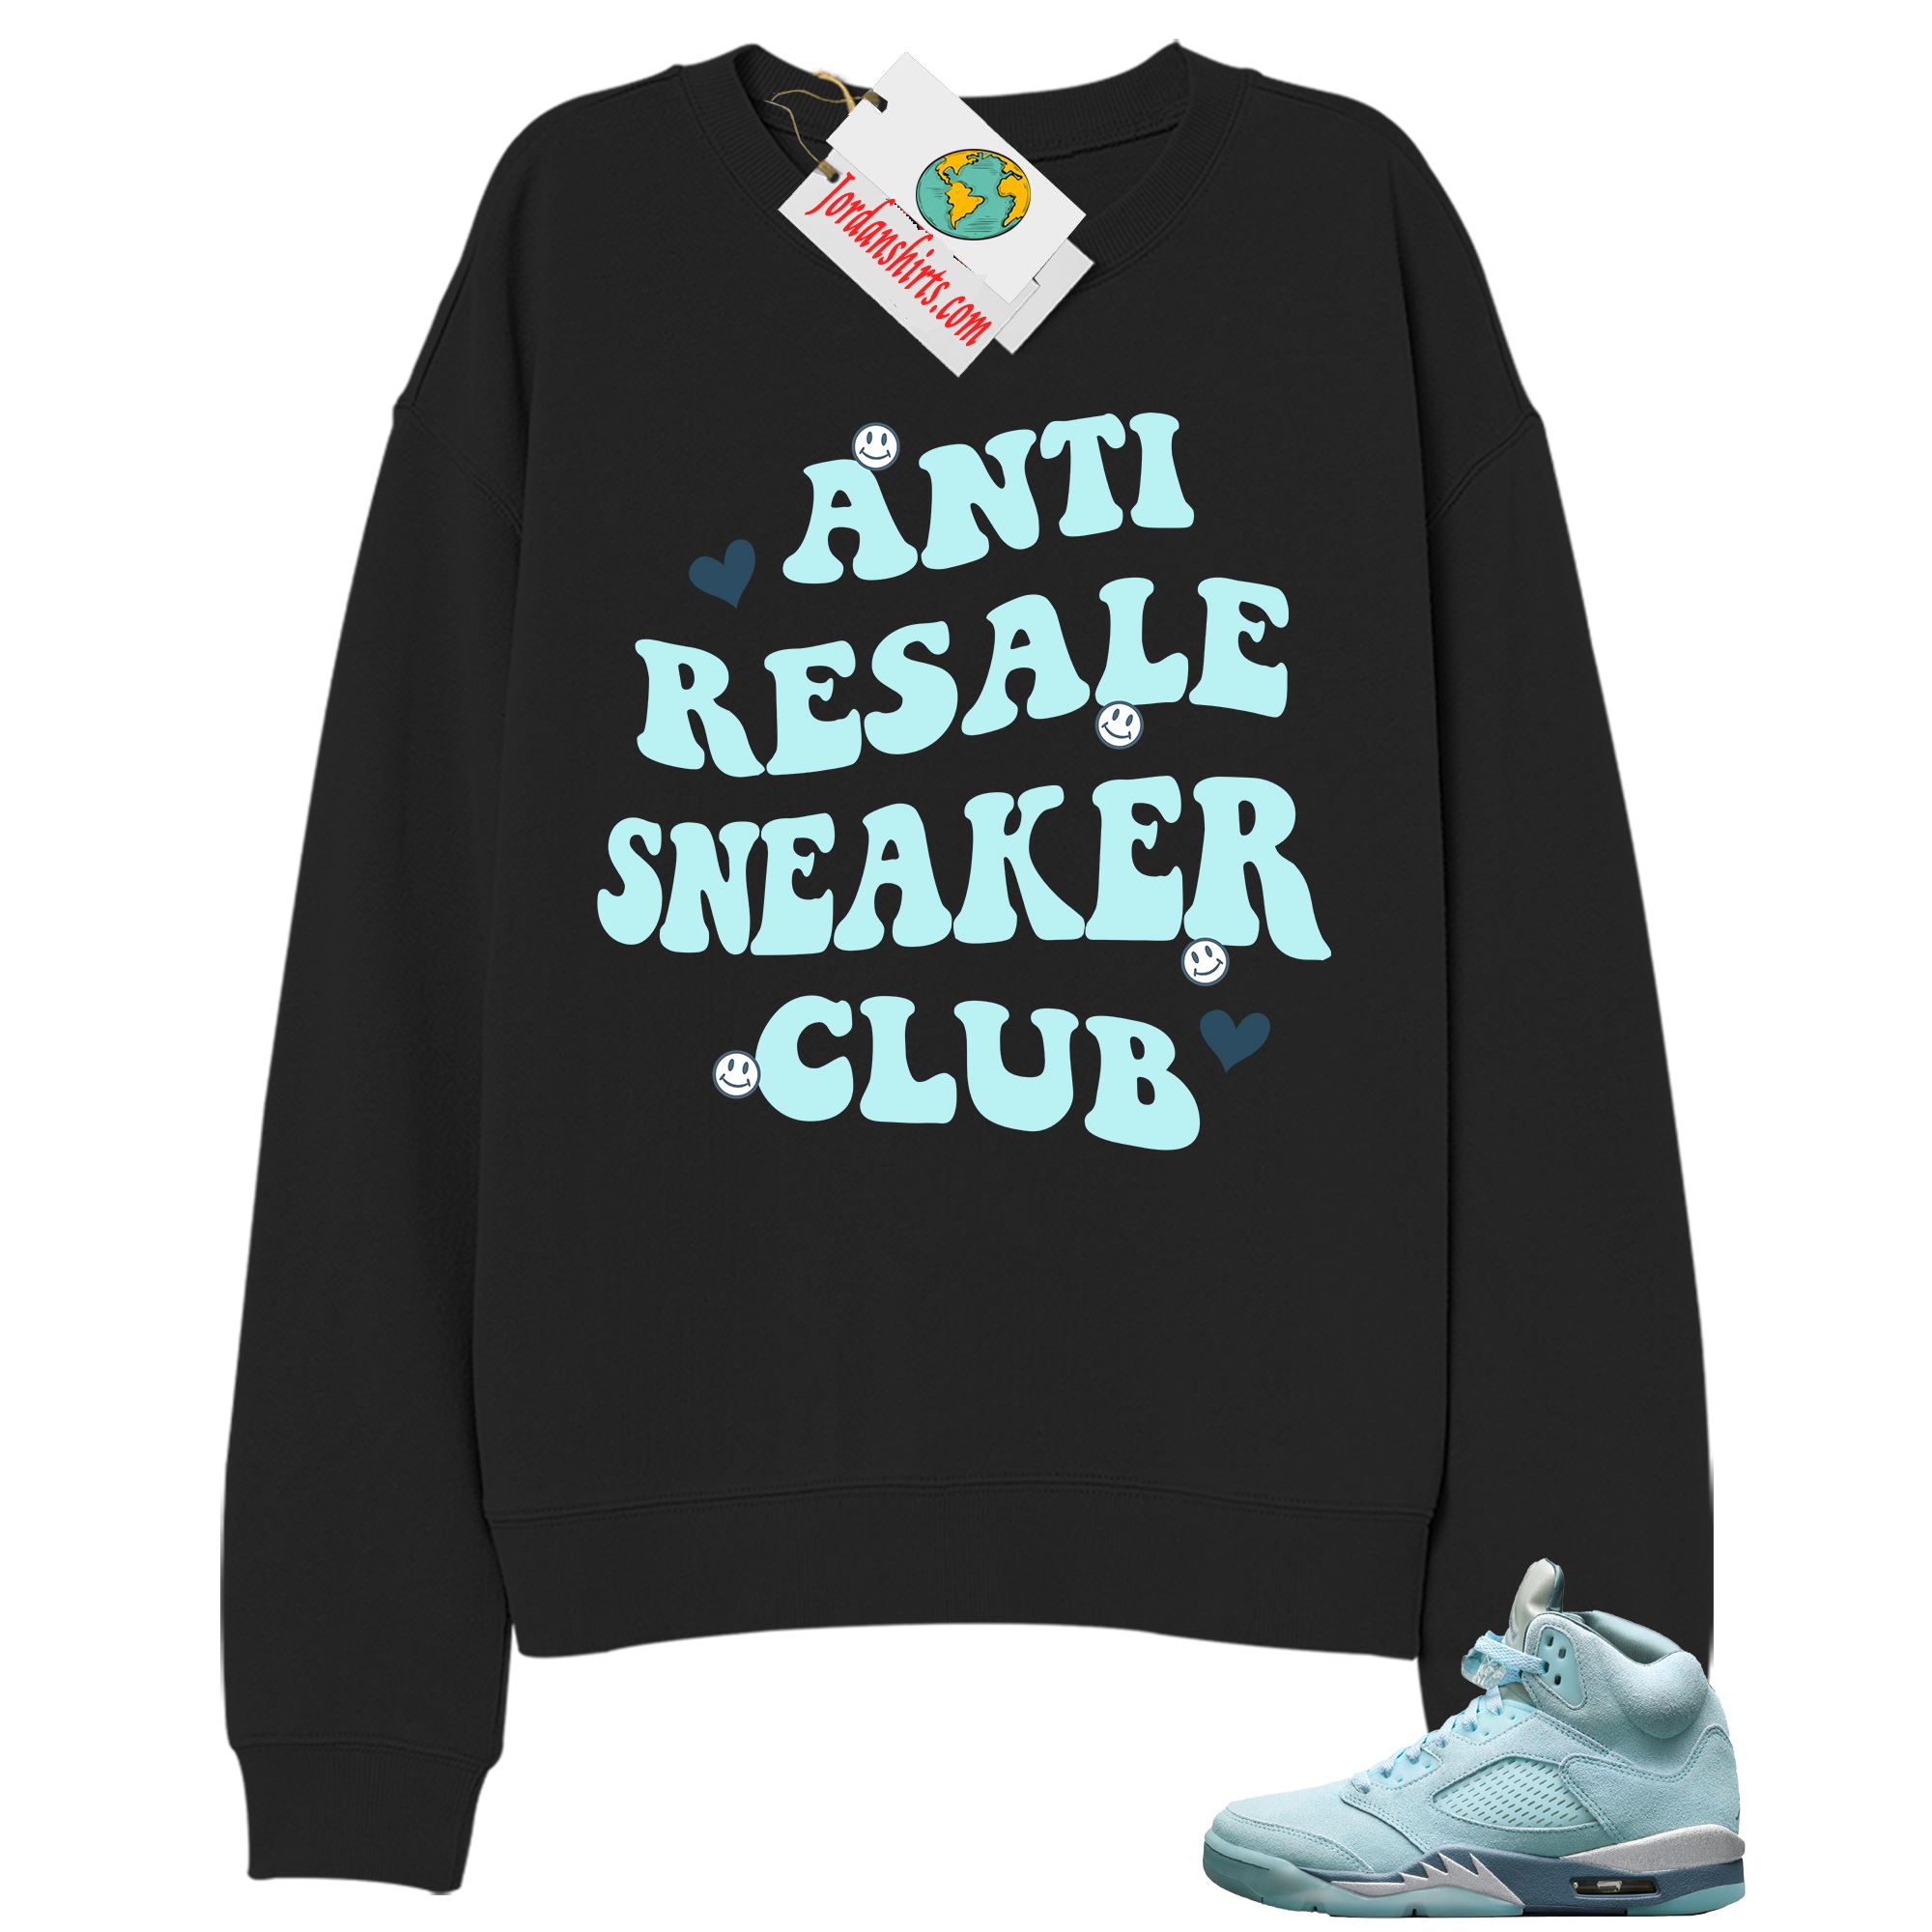 Jordan 5 Sweatshirt, Anti Resale Sneaker Club Black Sweatshirt Air Jordan 5 Bluebird 5s Plus Size Up To 5xl